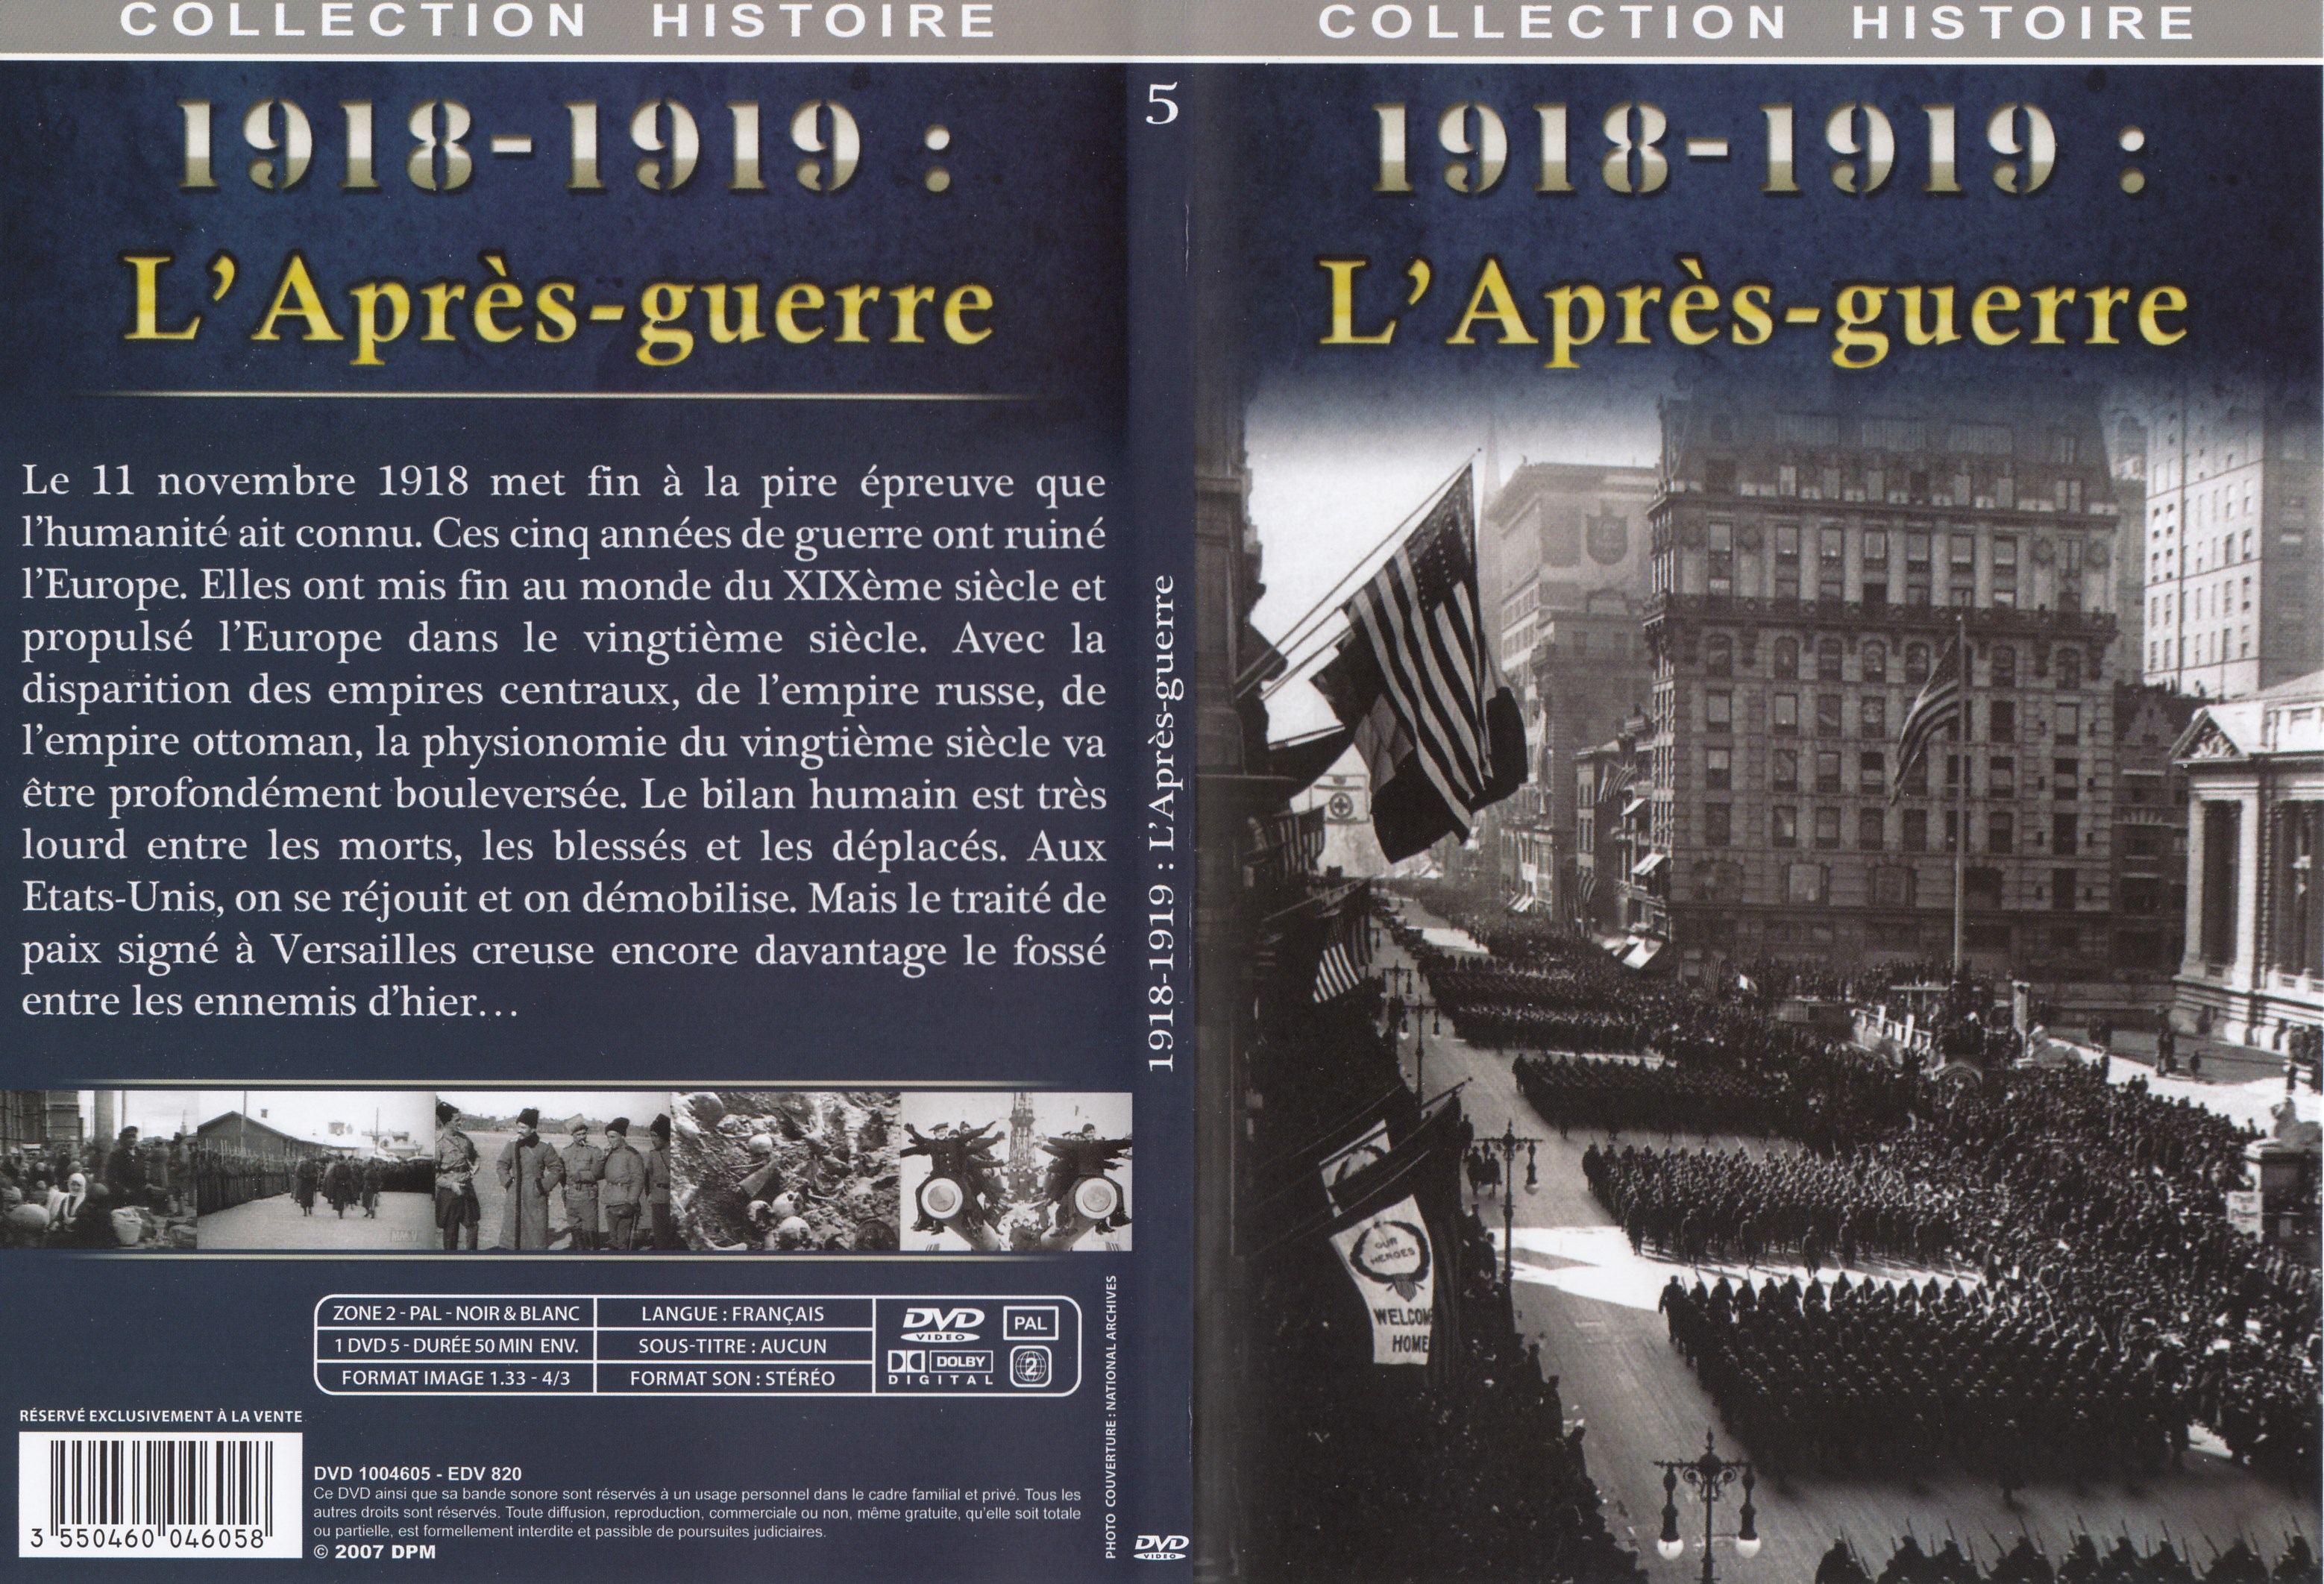 Jaquette DVD Collection Histoire DVD 5 1918 - 1919 L